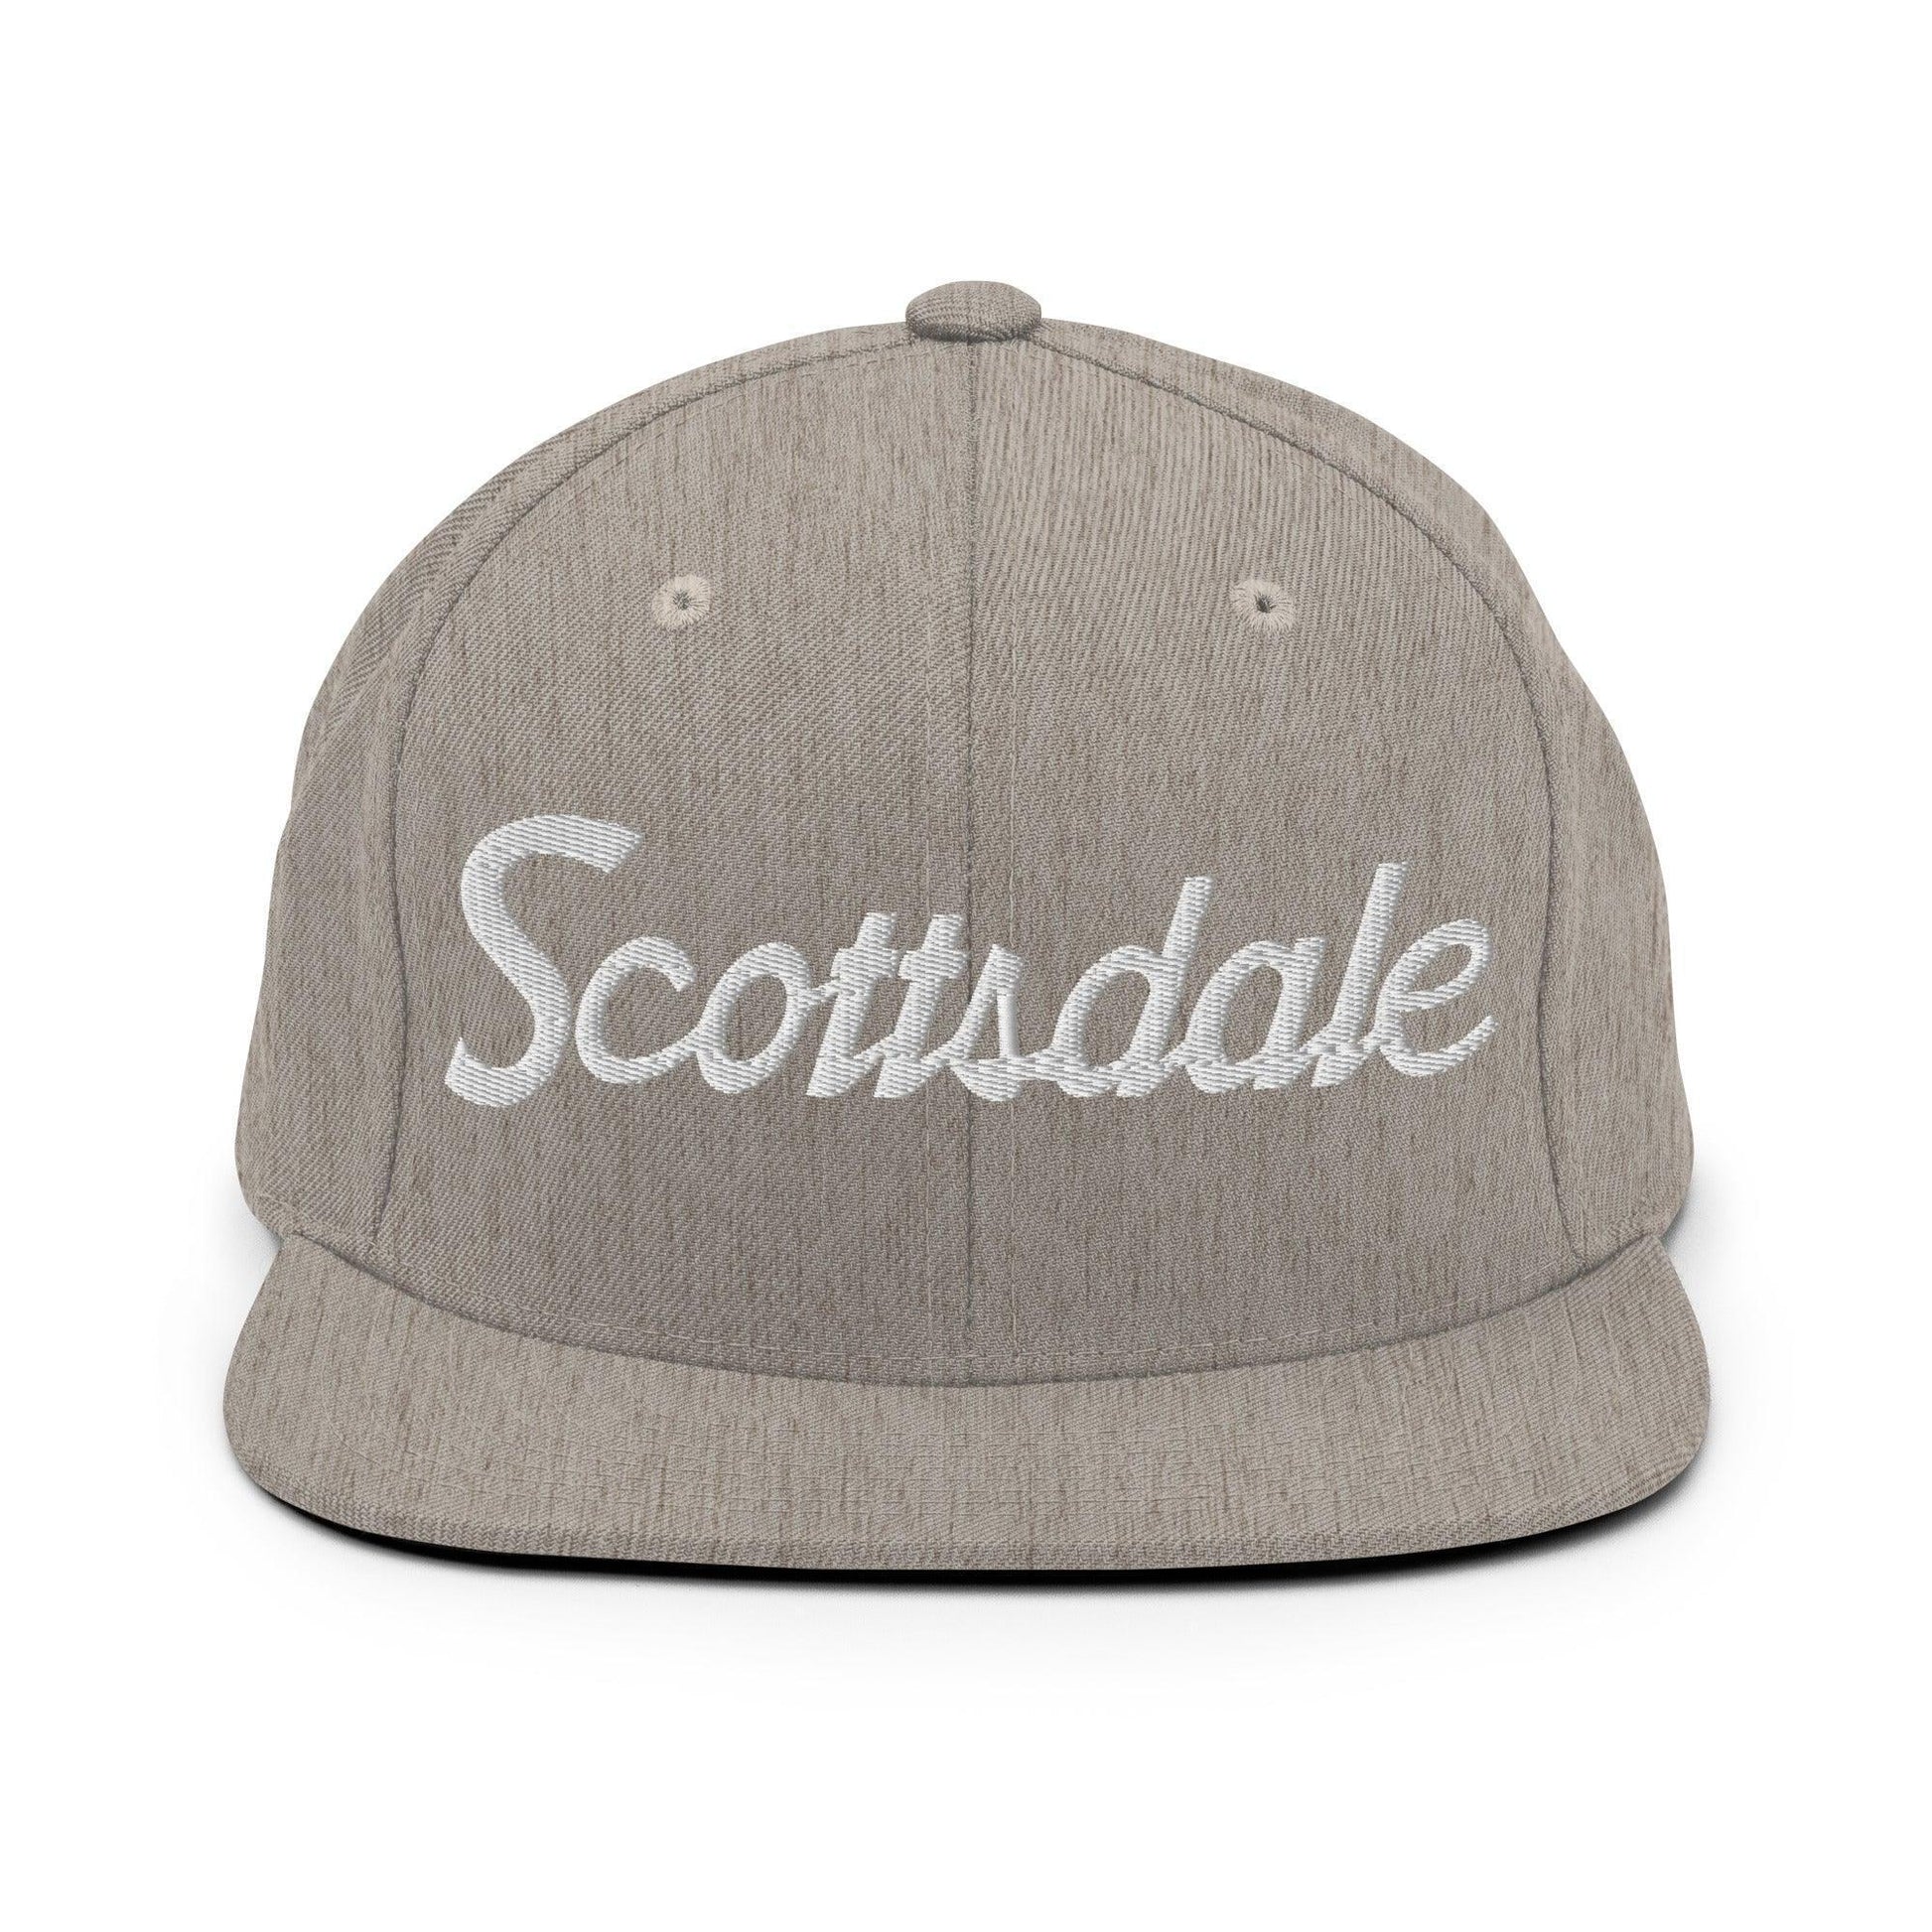 Scottsdale Script Snapback Hat Heather Grey